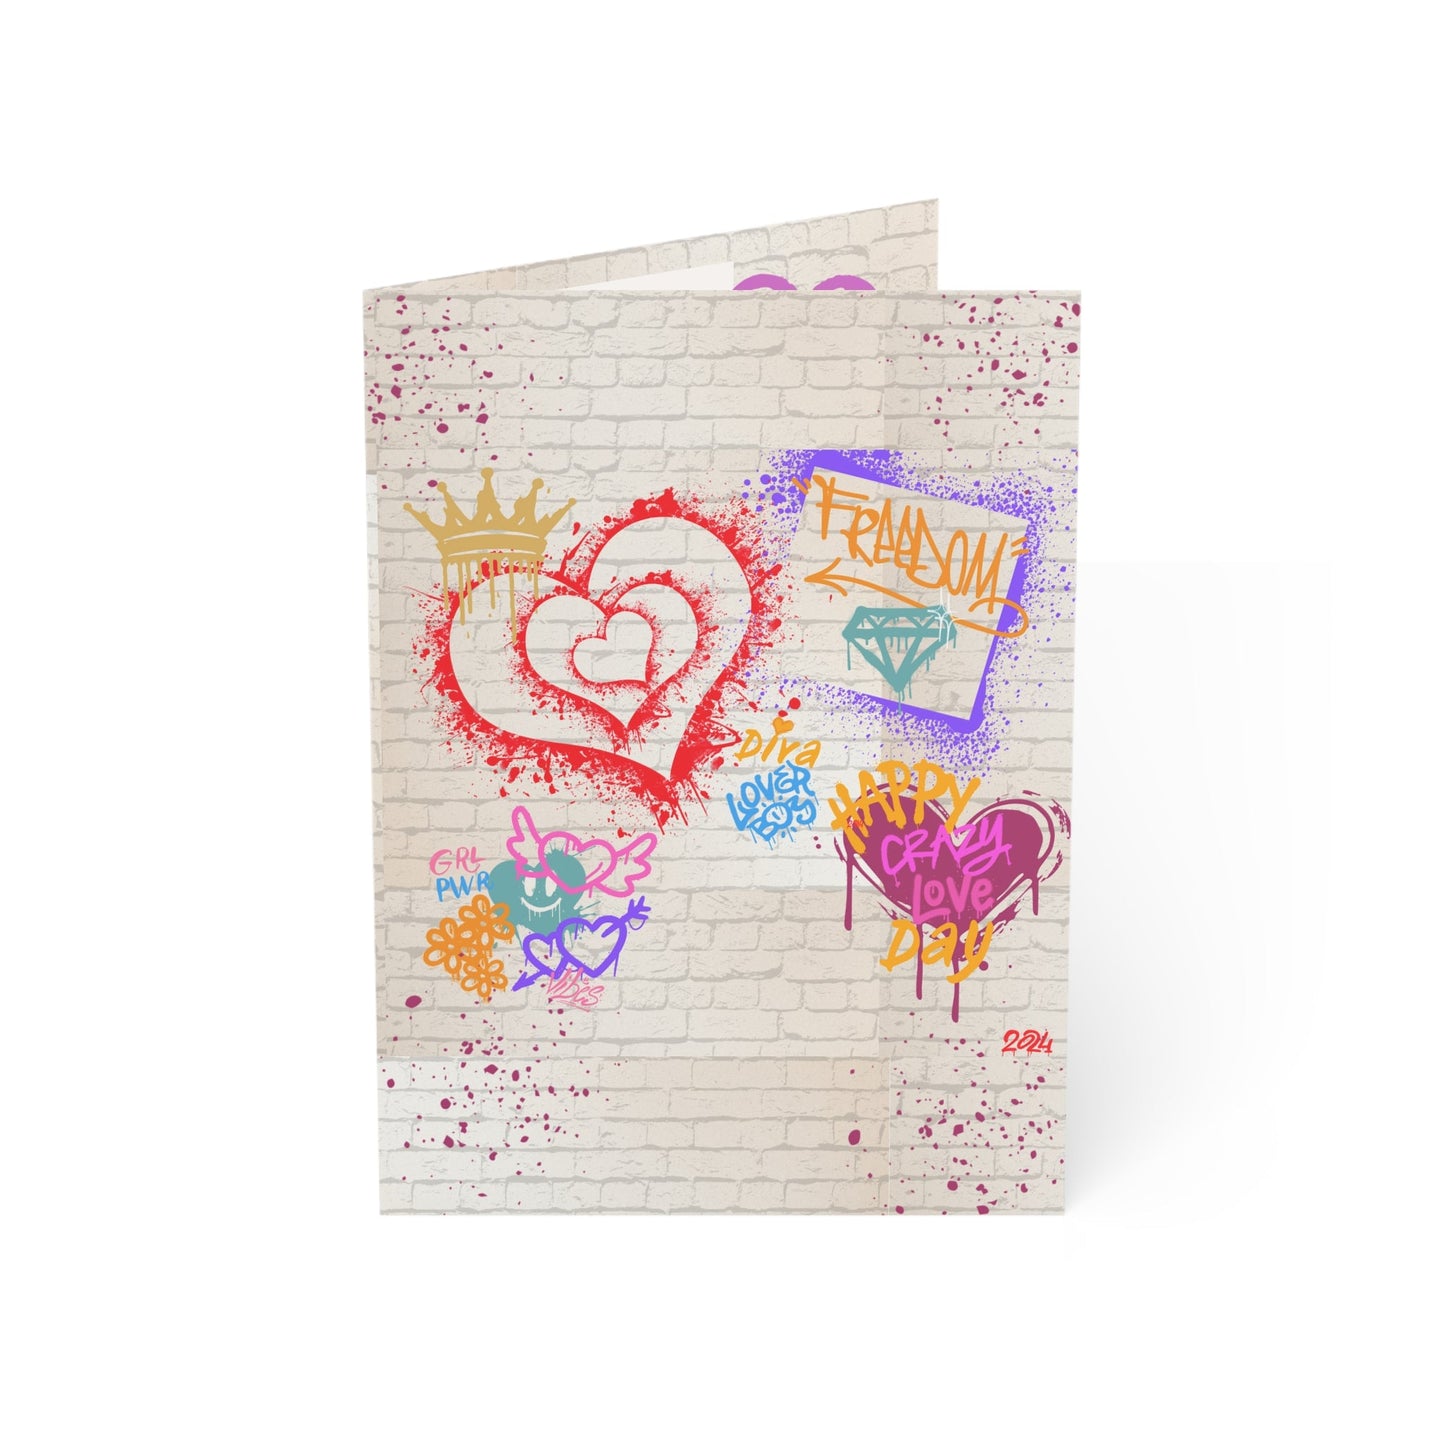 Love Bomb | Graffiti | Greeting Cards (10 pcs)